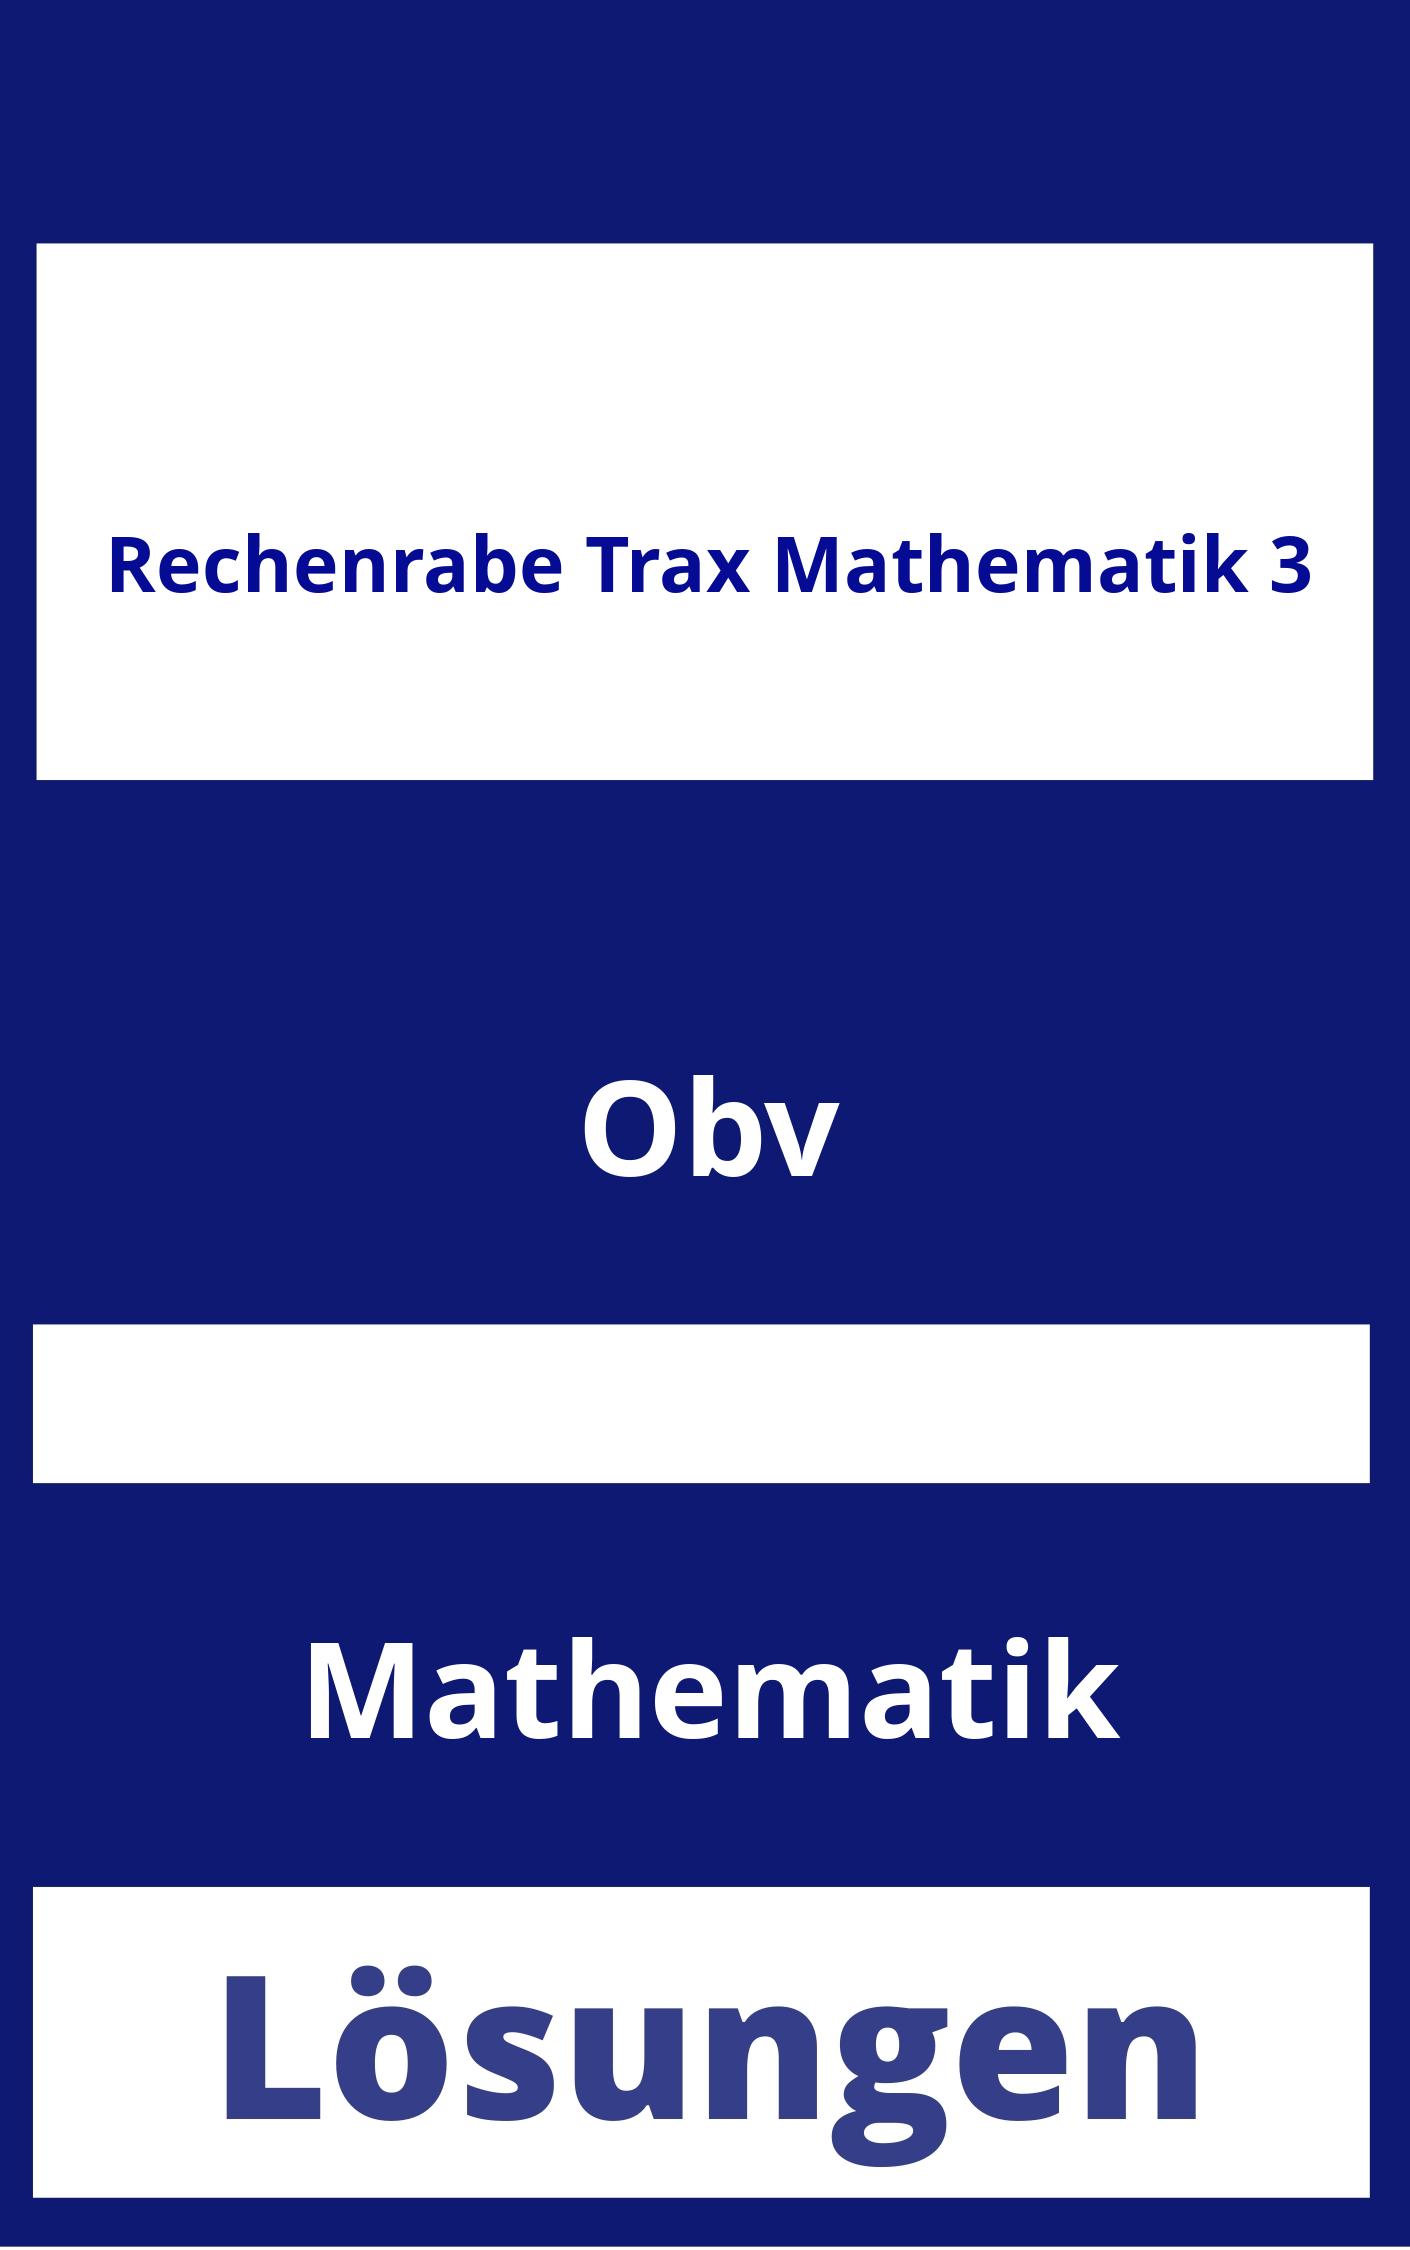 Rechenrabe Trax Mathematik 3